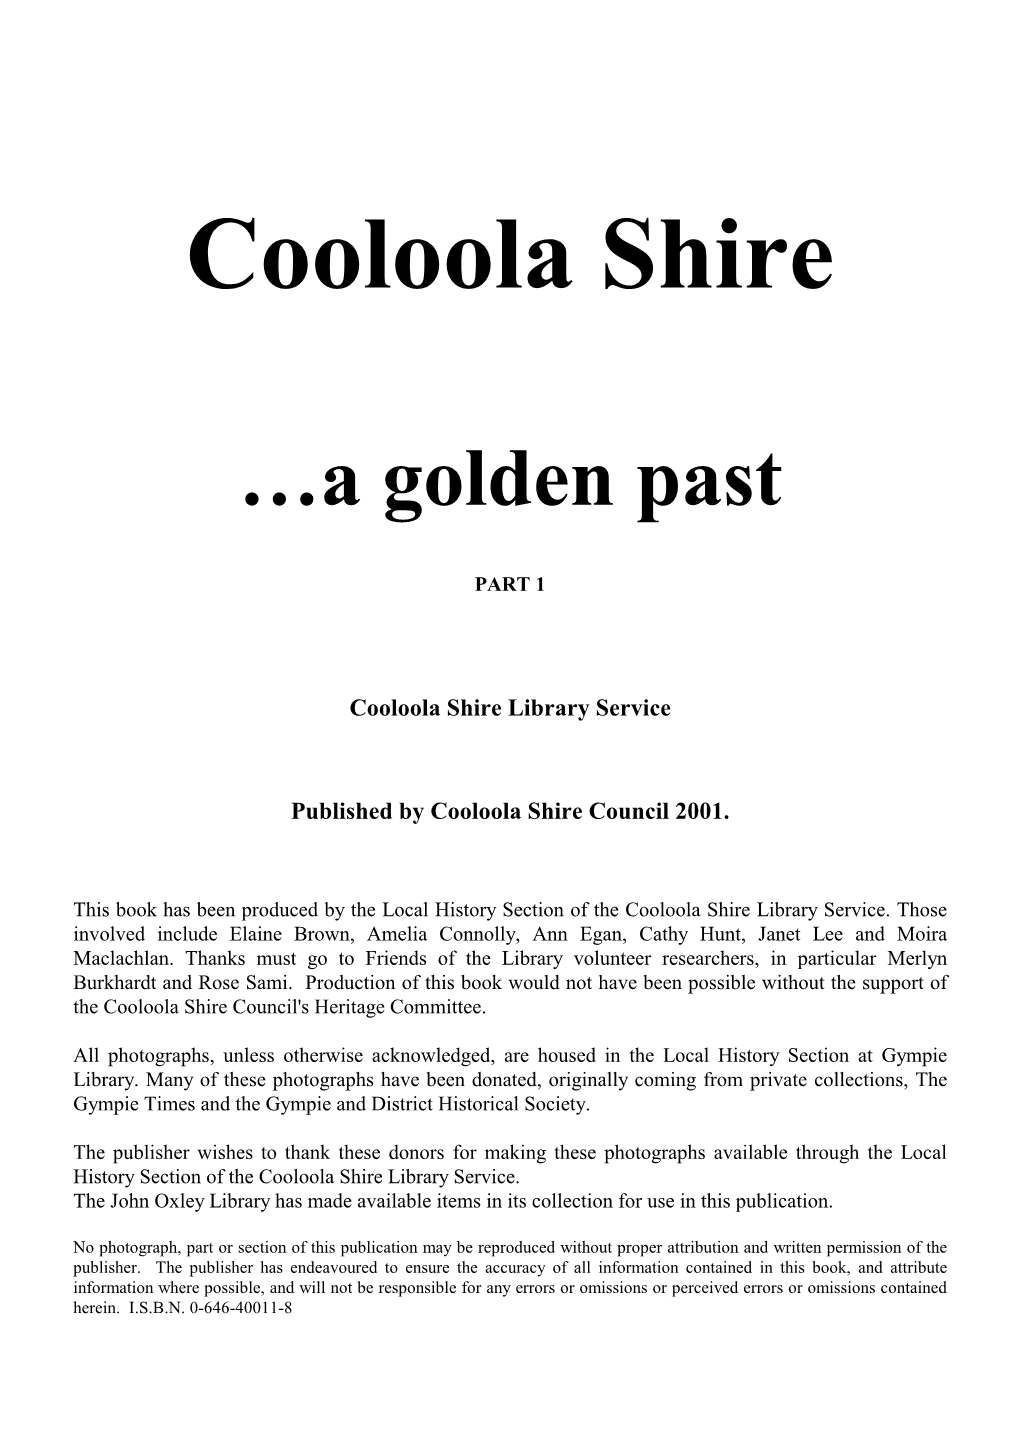 Cooloola Shire...A Golden Past